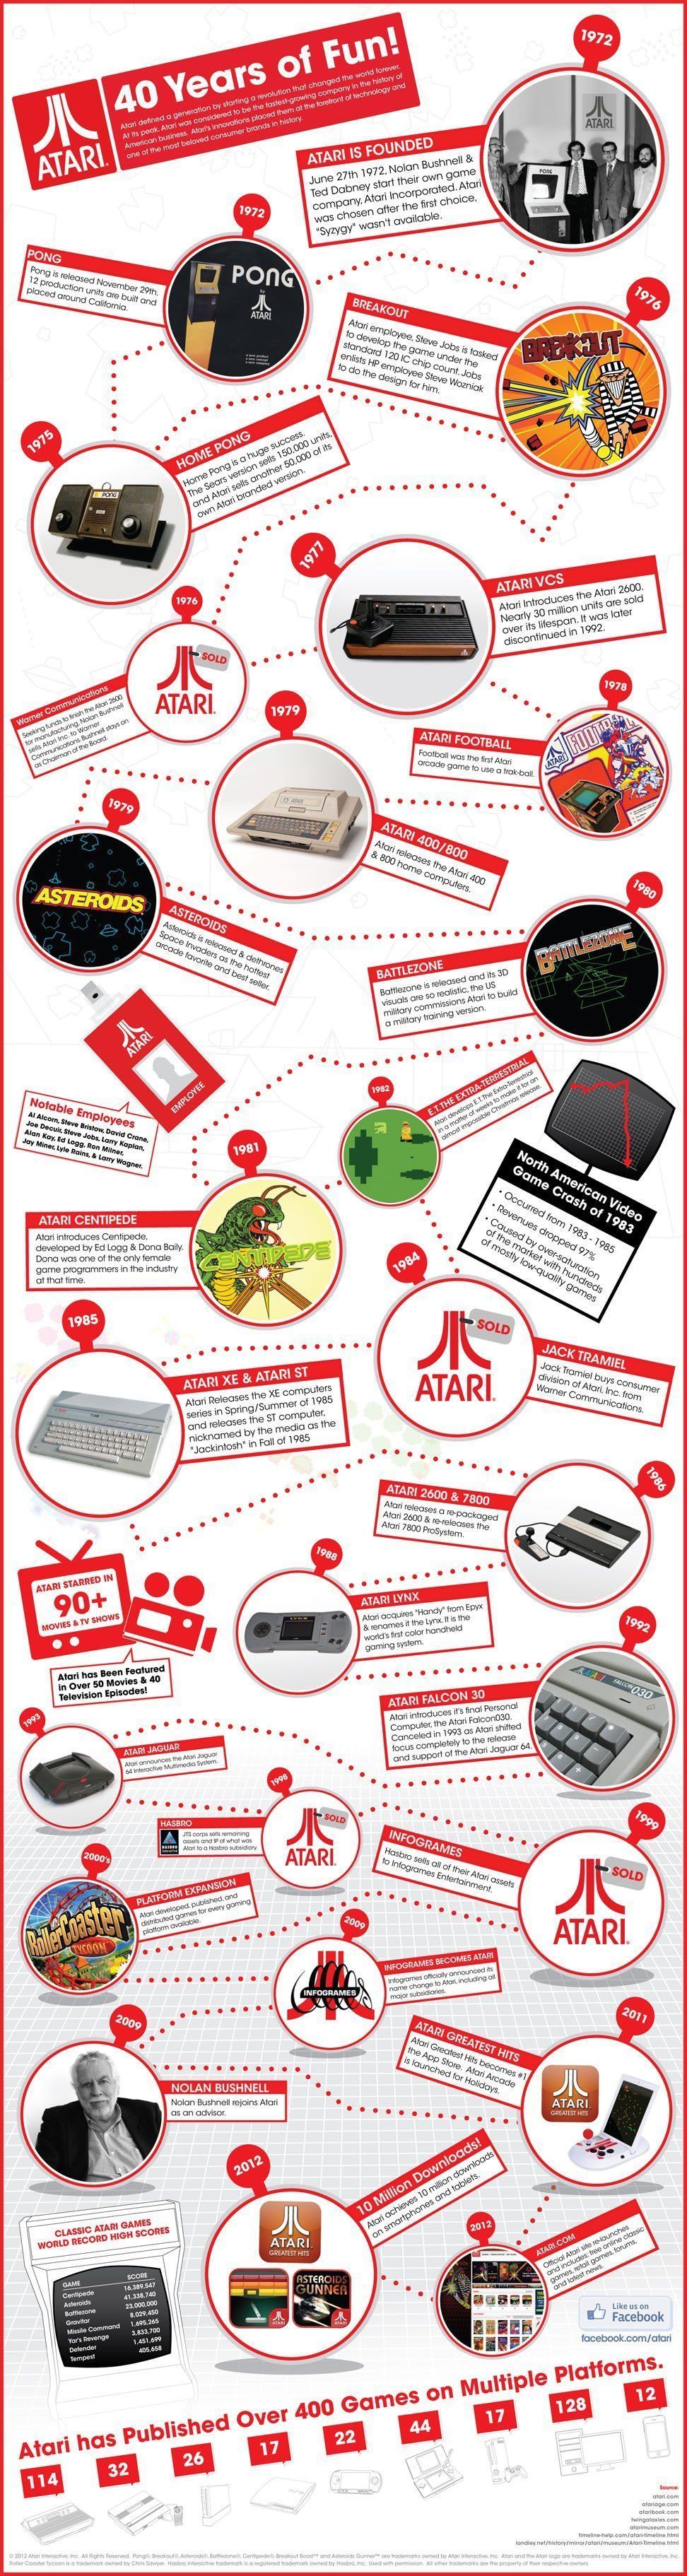 Atari fete ses 40 ans #2